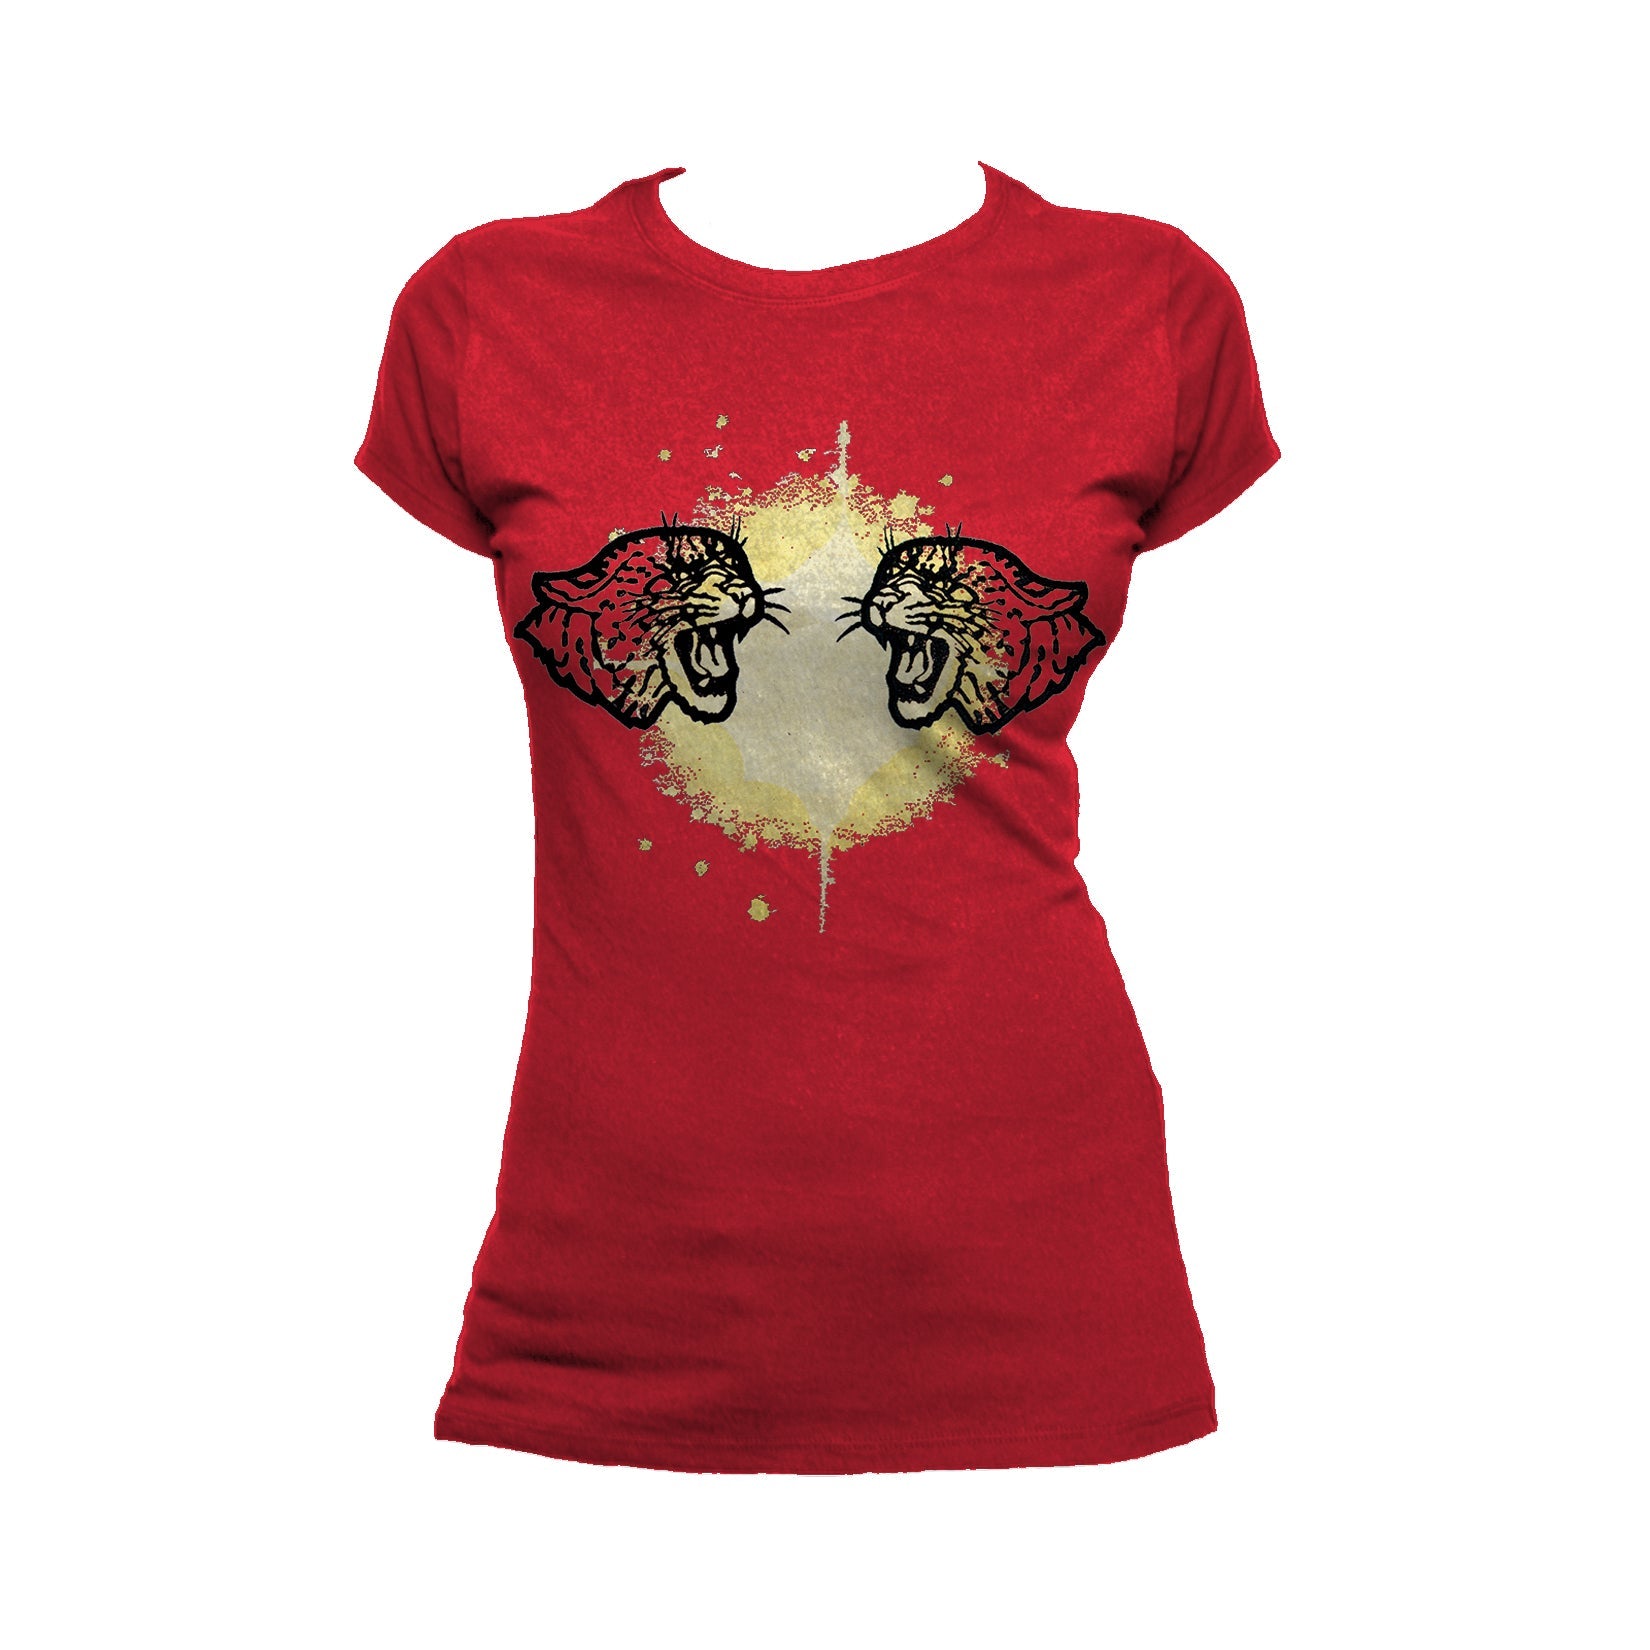 US Brand X Old's Kool Leopard Mirror Official Women's T-Shirt ()